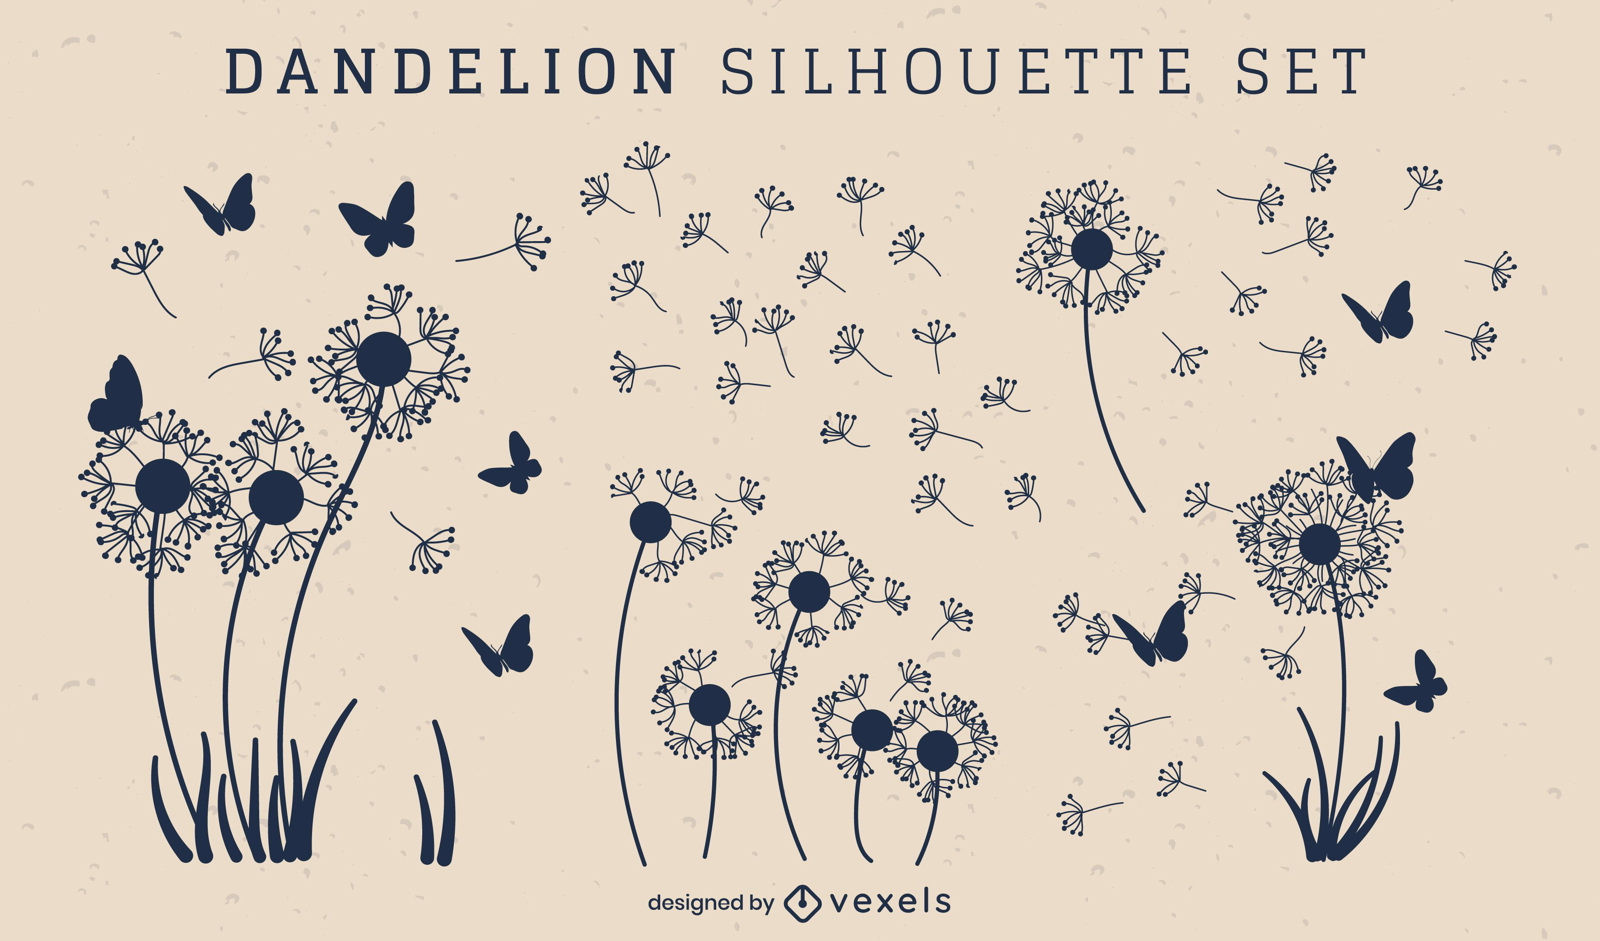 Set of dandelion silhouettes